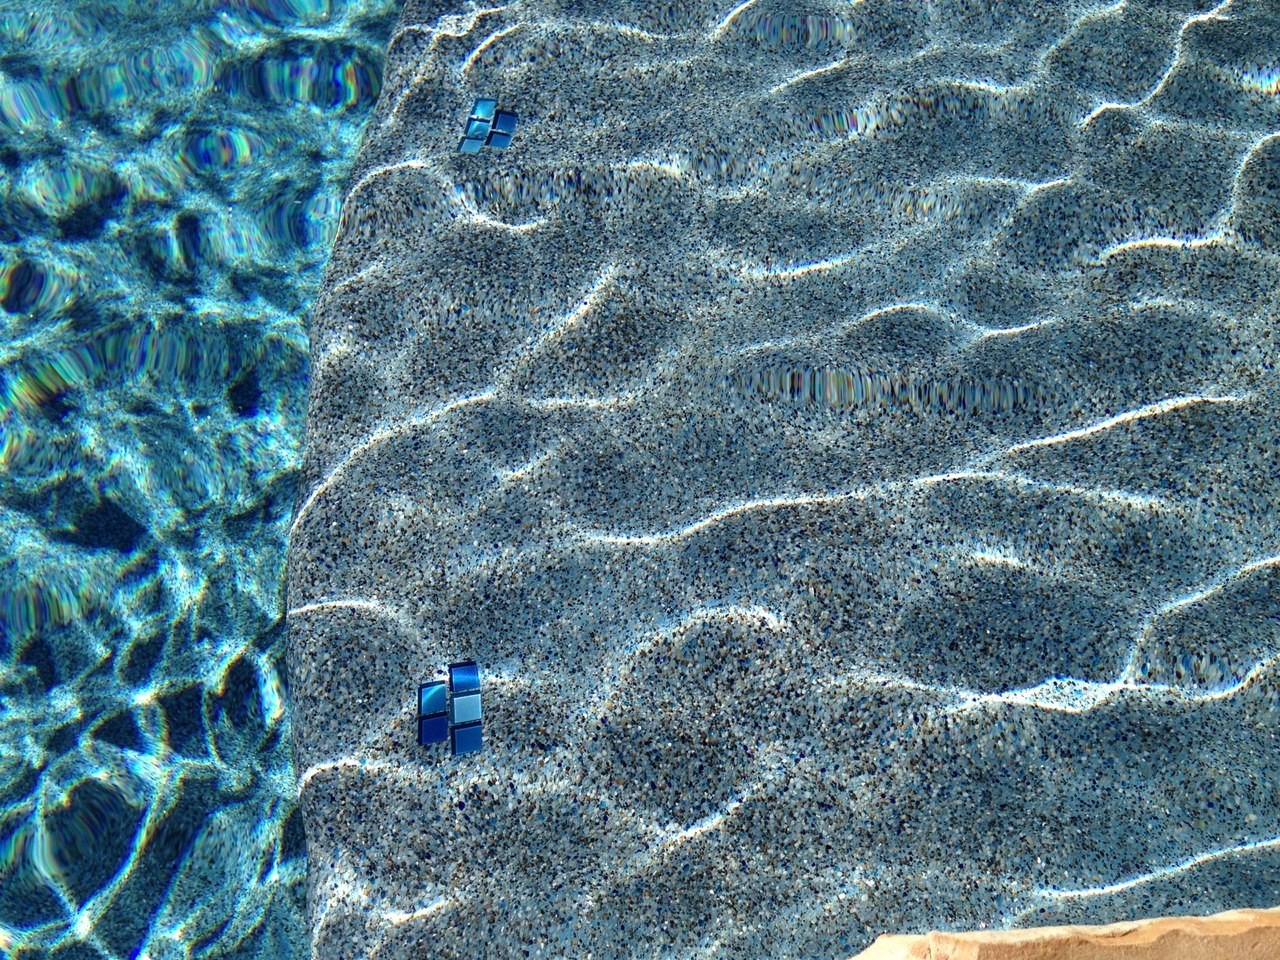 plaster-pool-resurfacing